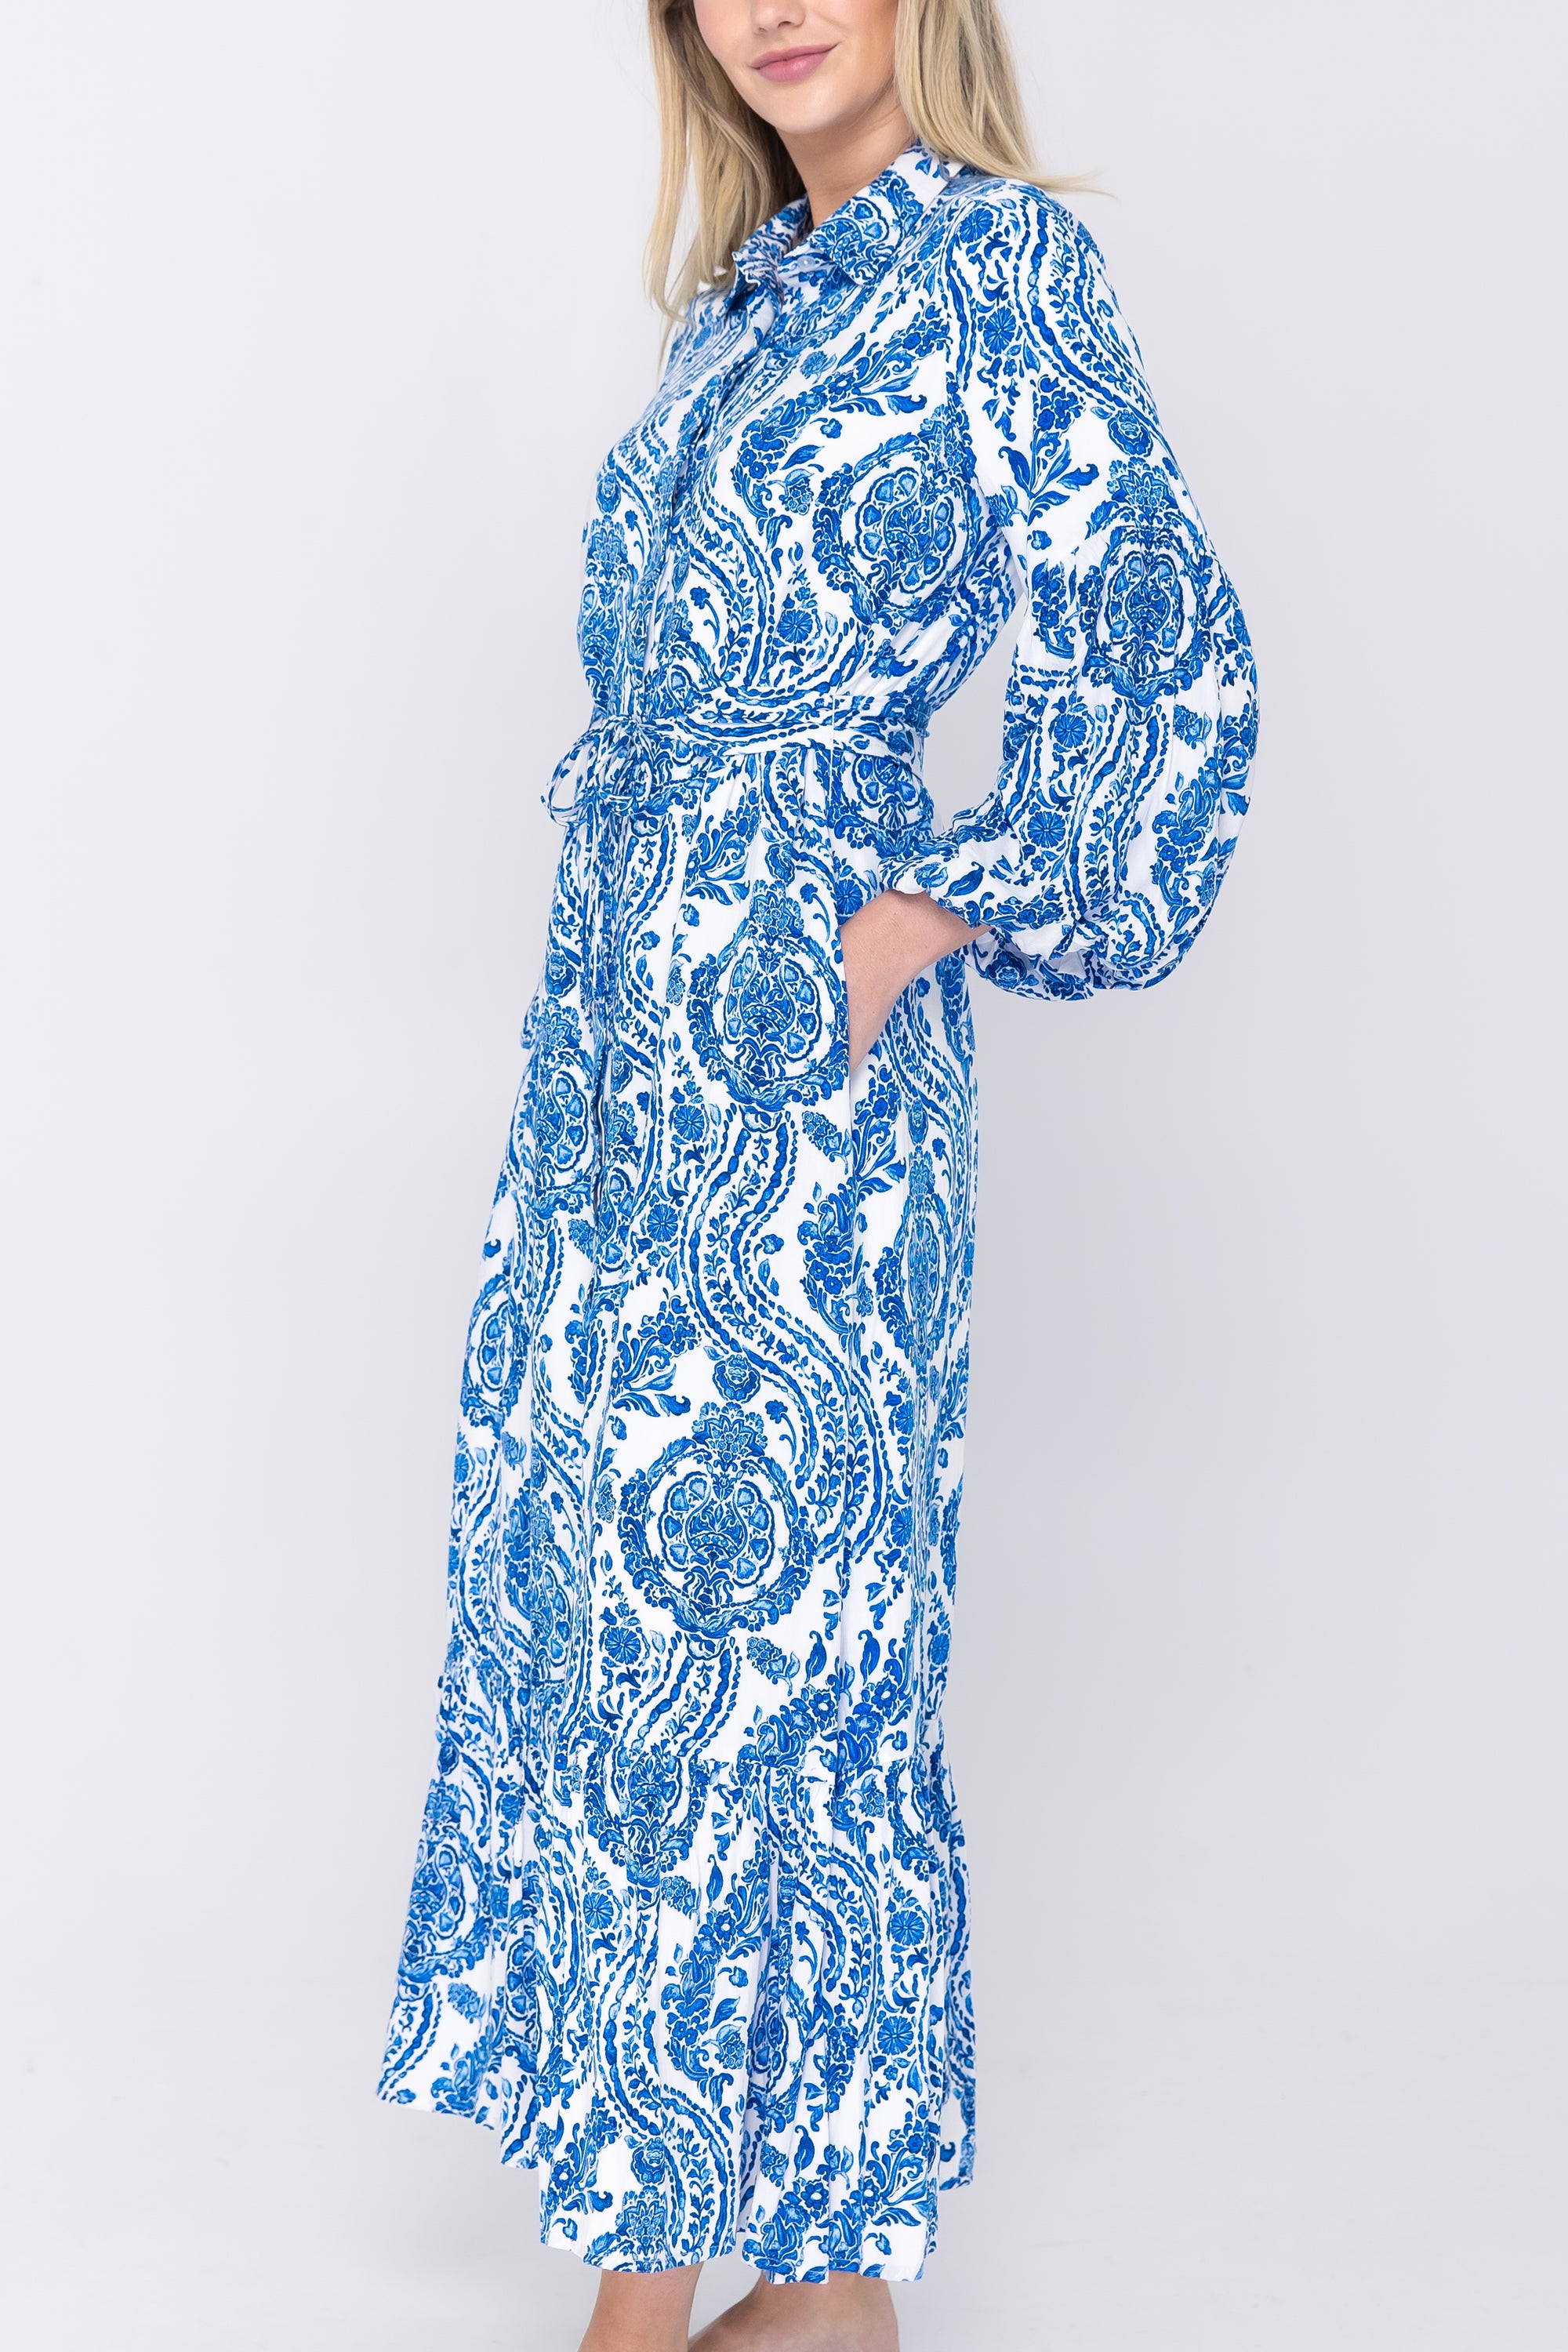 ALICE DRESS Long Sleeve (WHITE/BLUE)